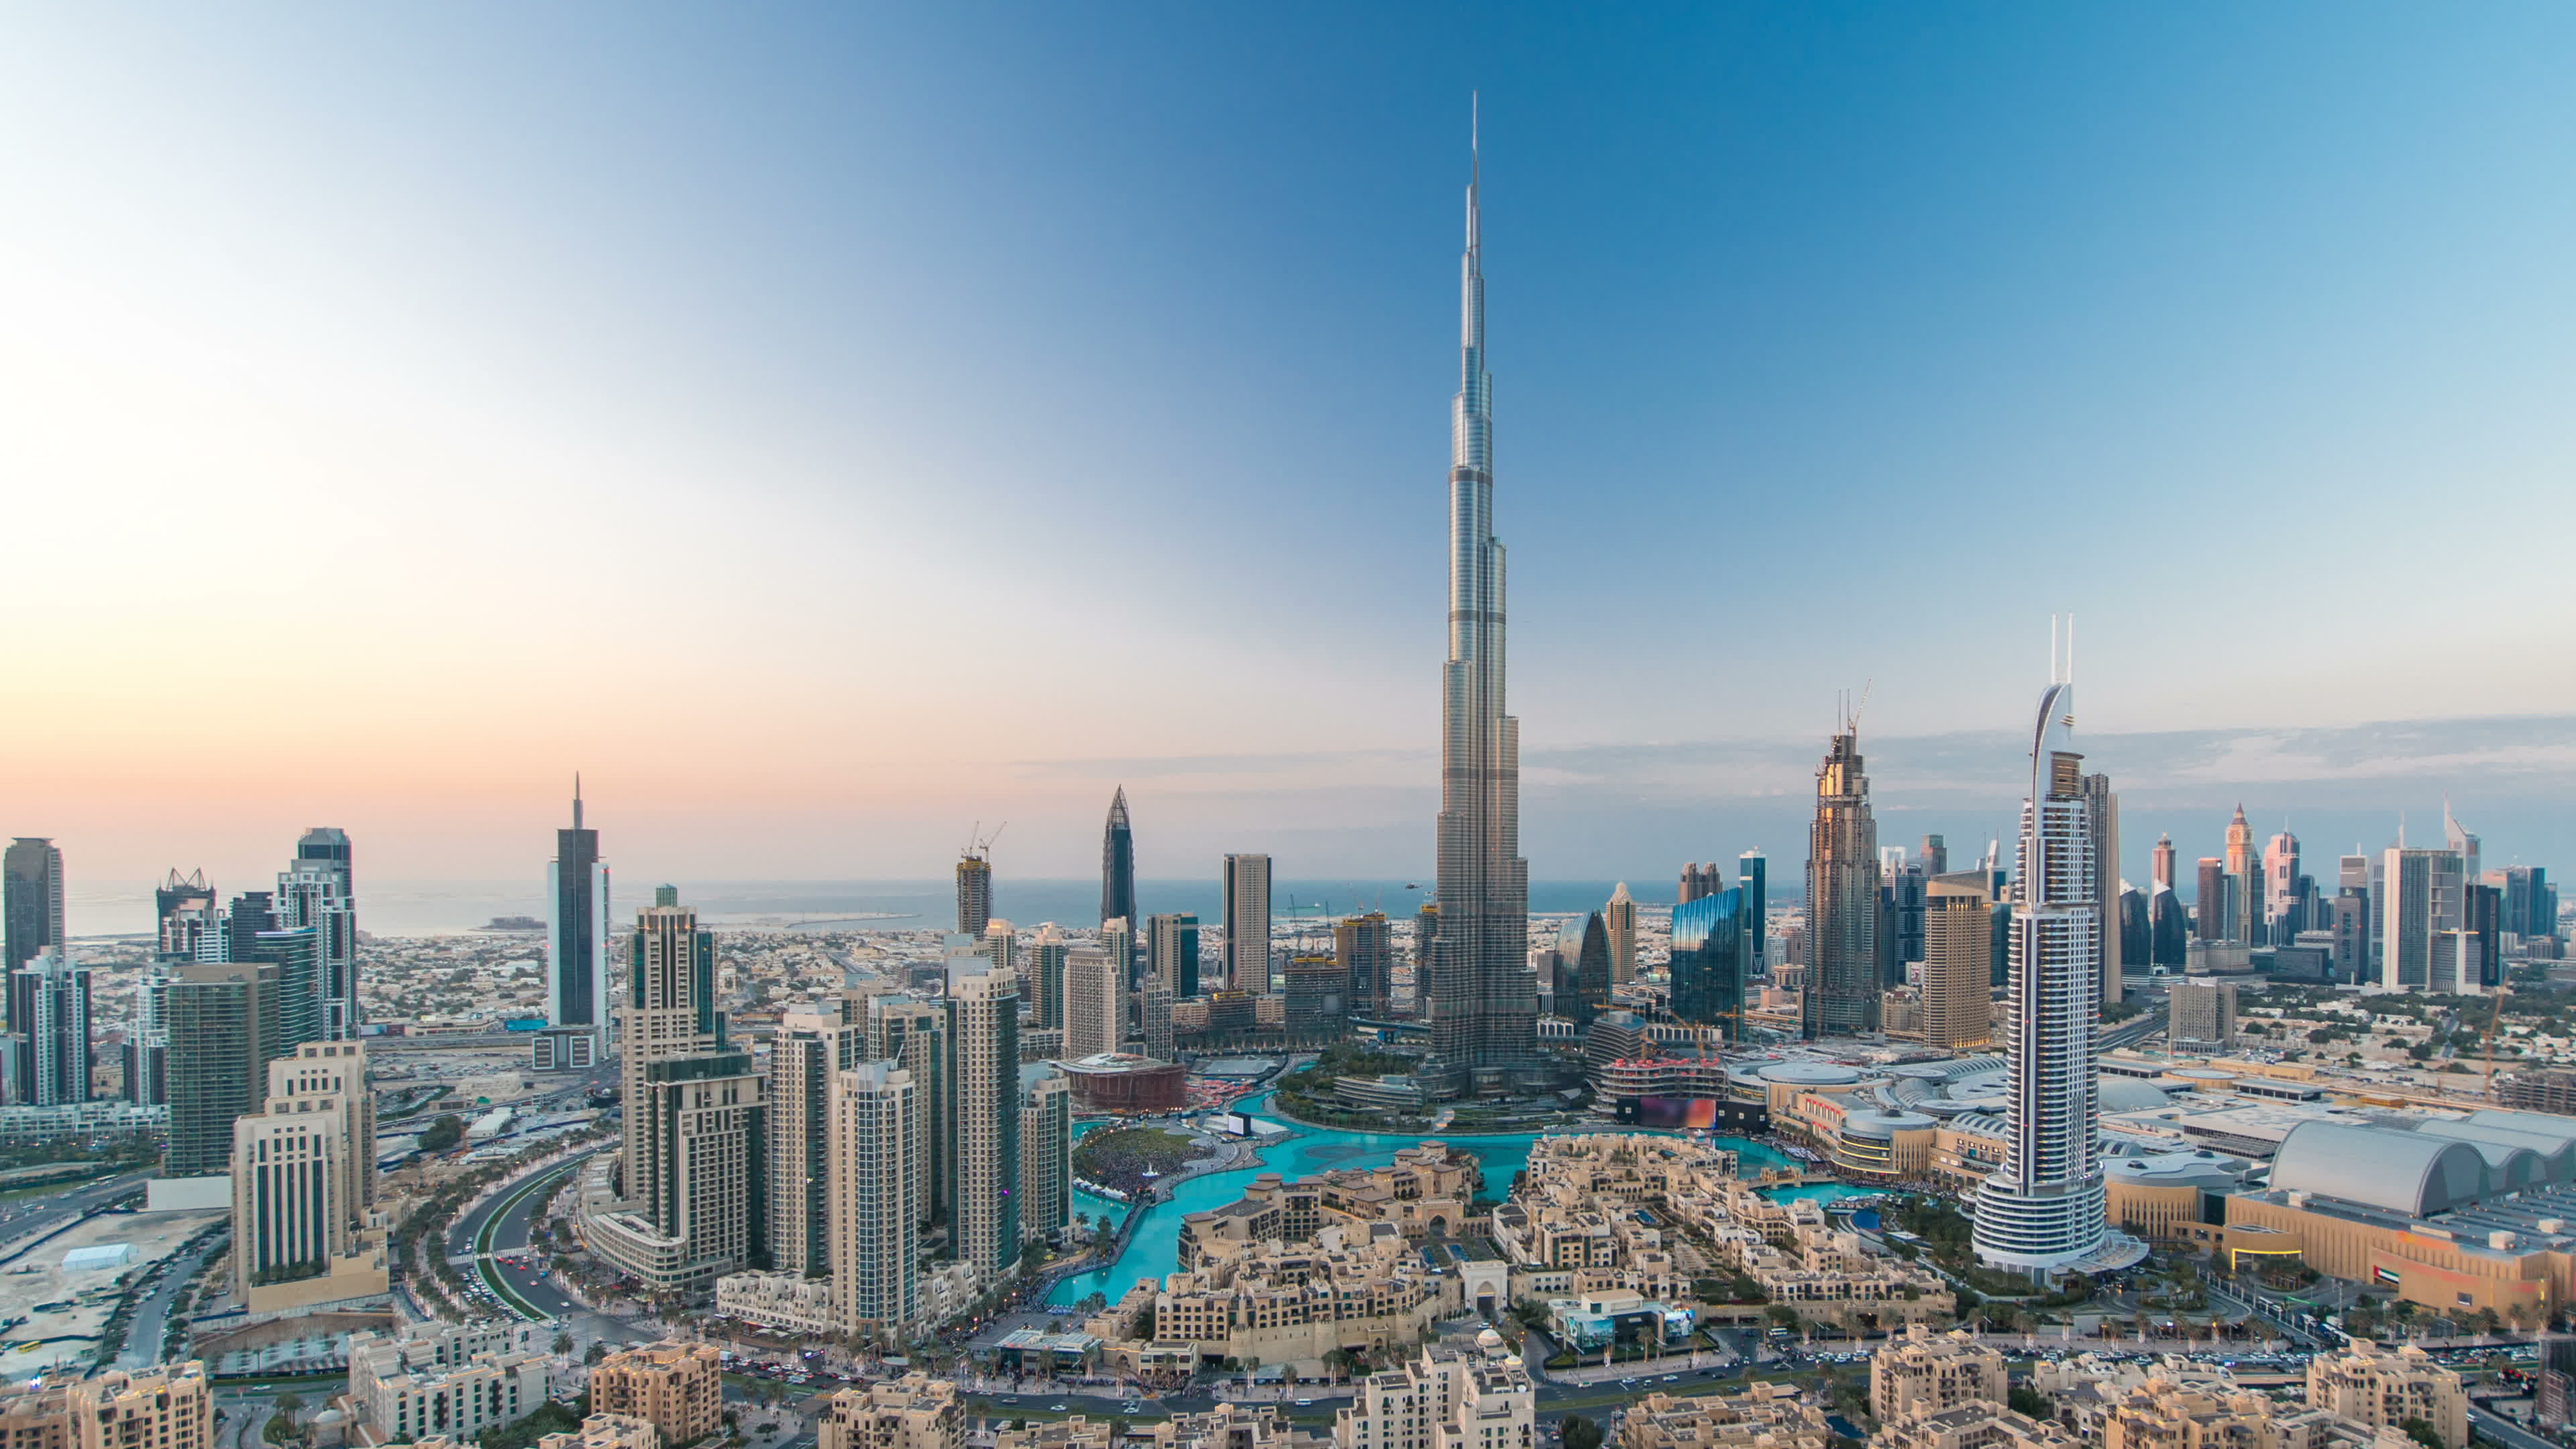 El skyline de Dubai, coronado por el Burj Khalifa, el edificio m�s alto del mundo.